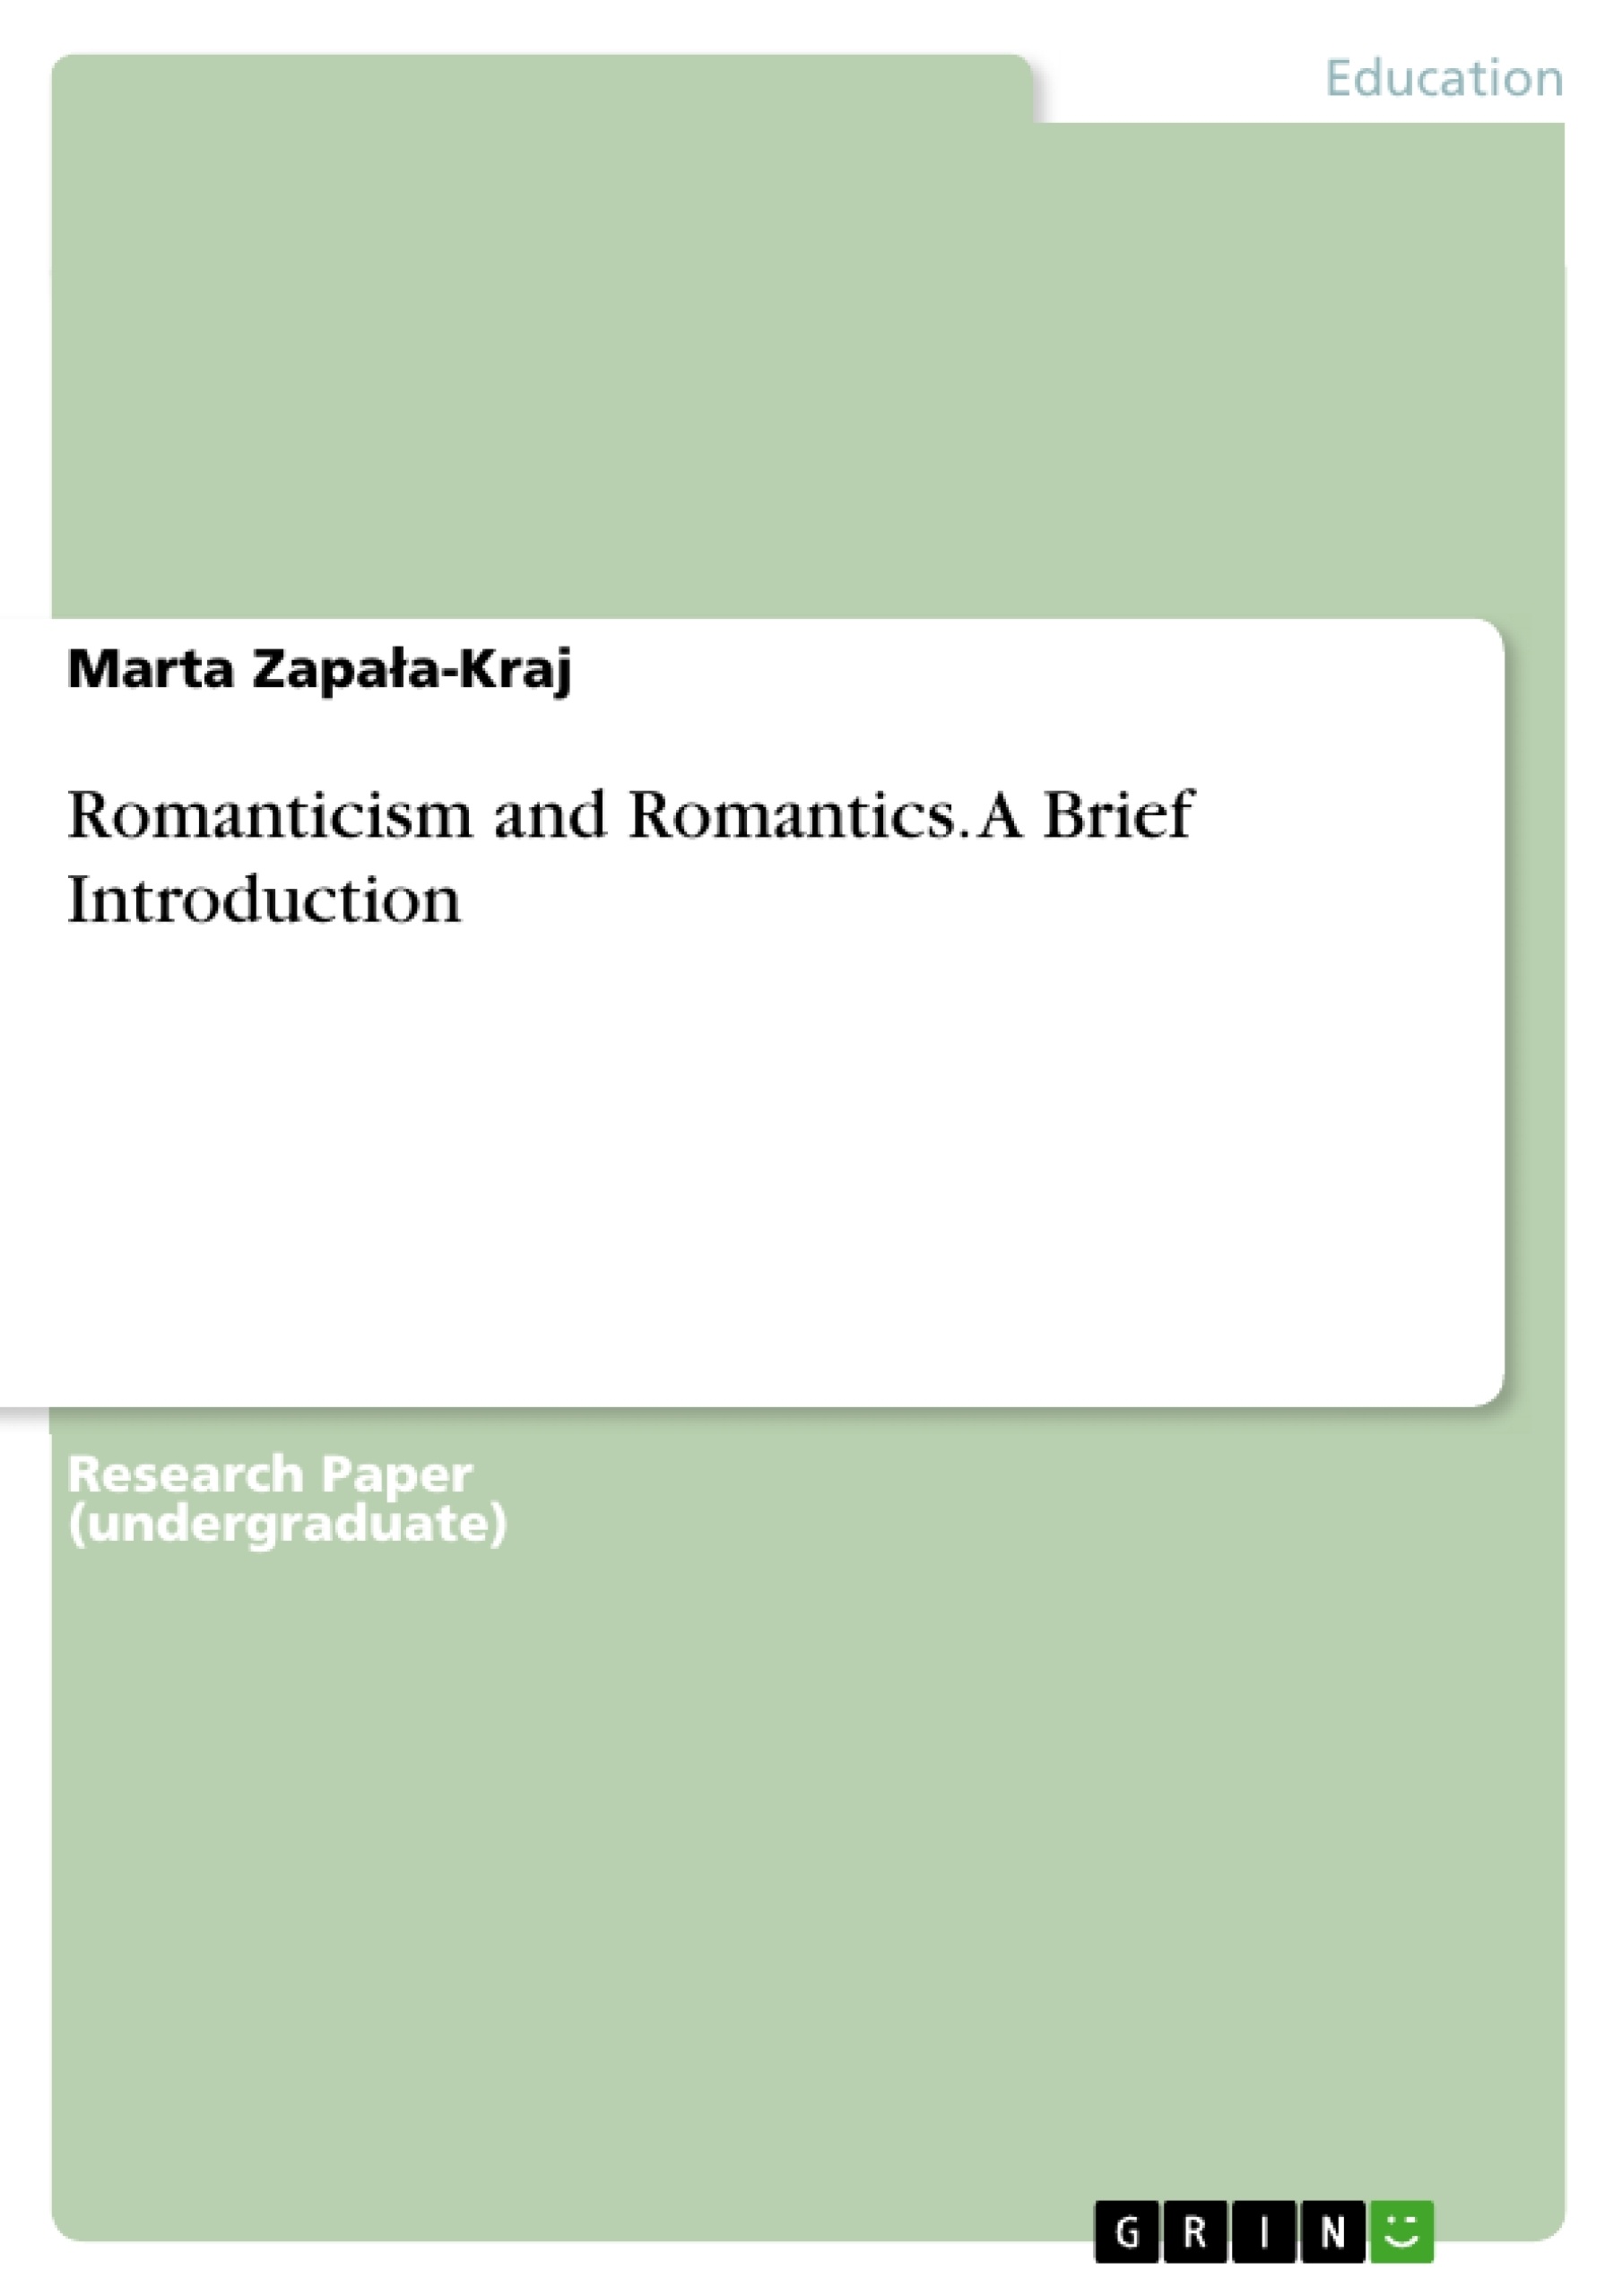 Title: Romanticism and Romantics. A Brief Introduction